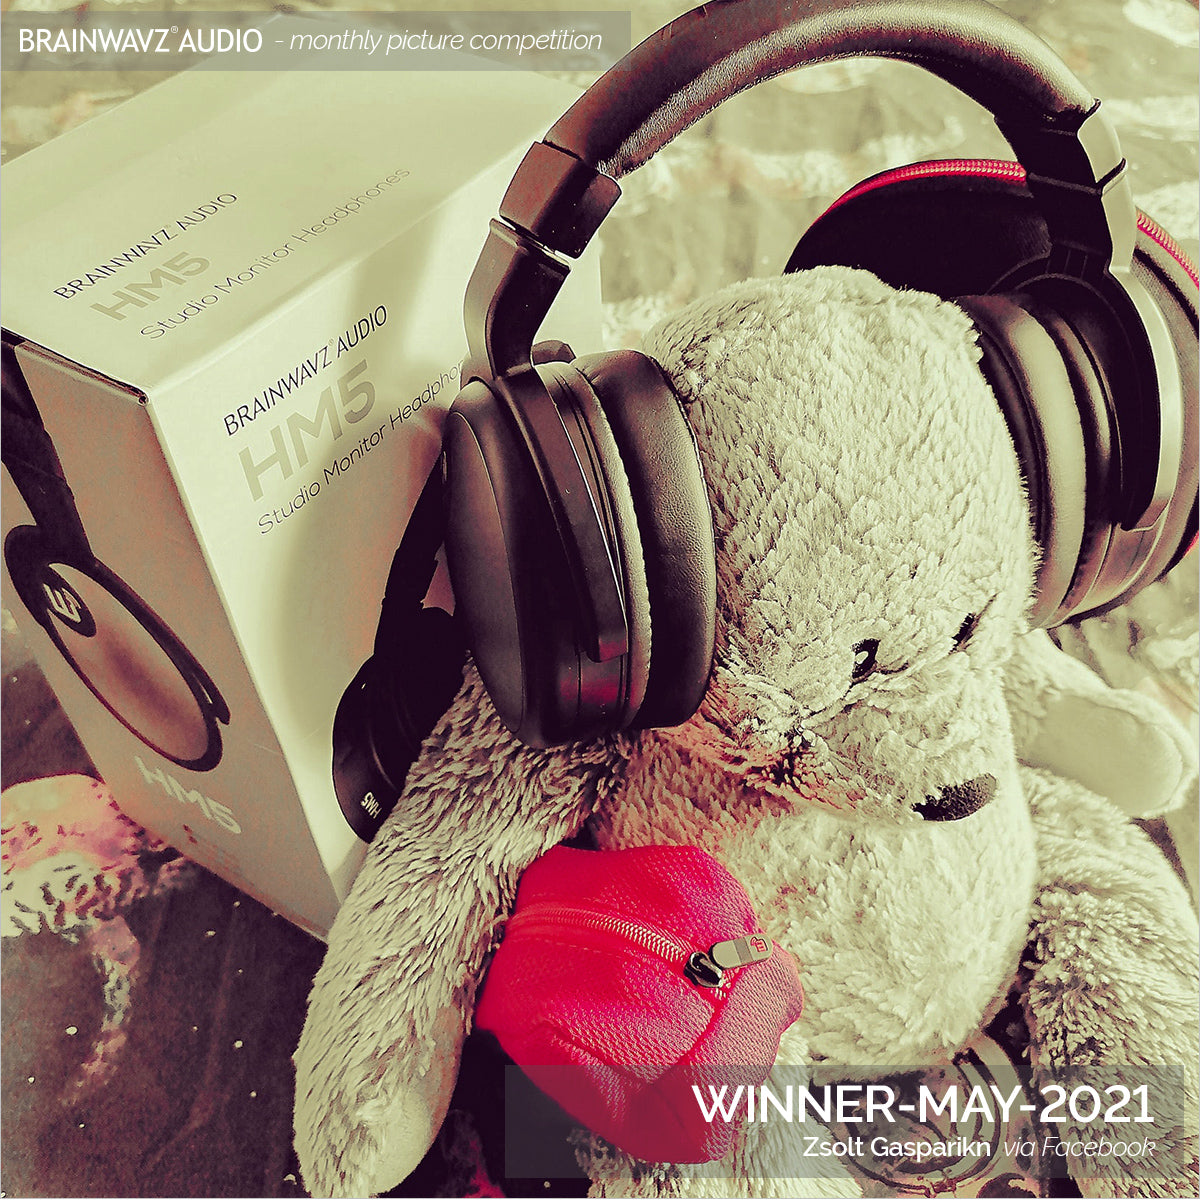 Winning image - Teddy wearing Brainwavz HM5 headphoners